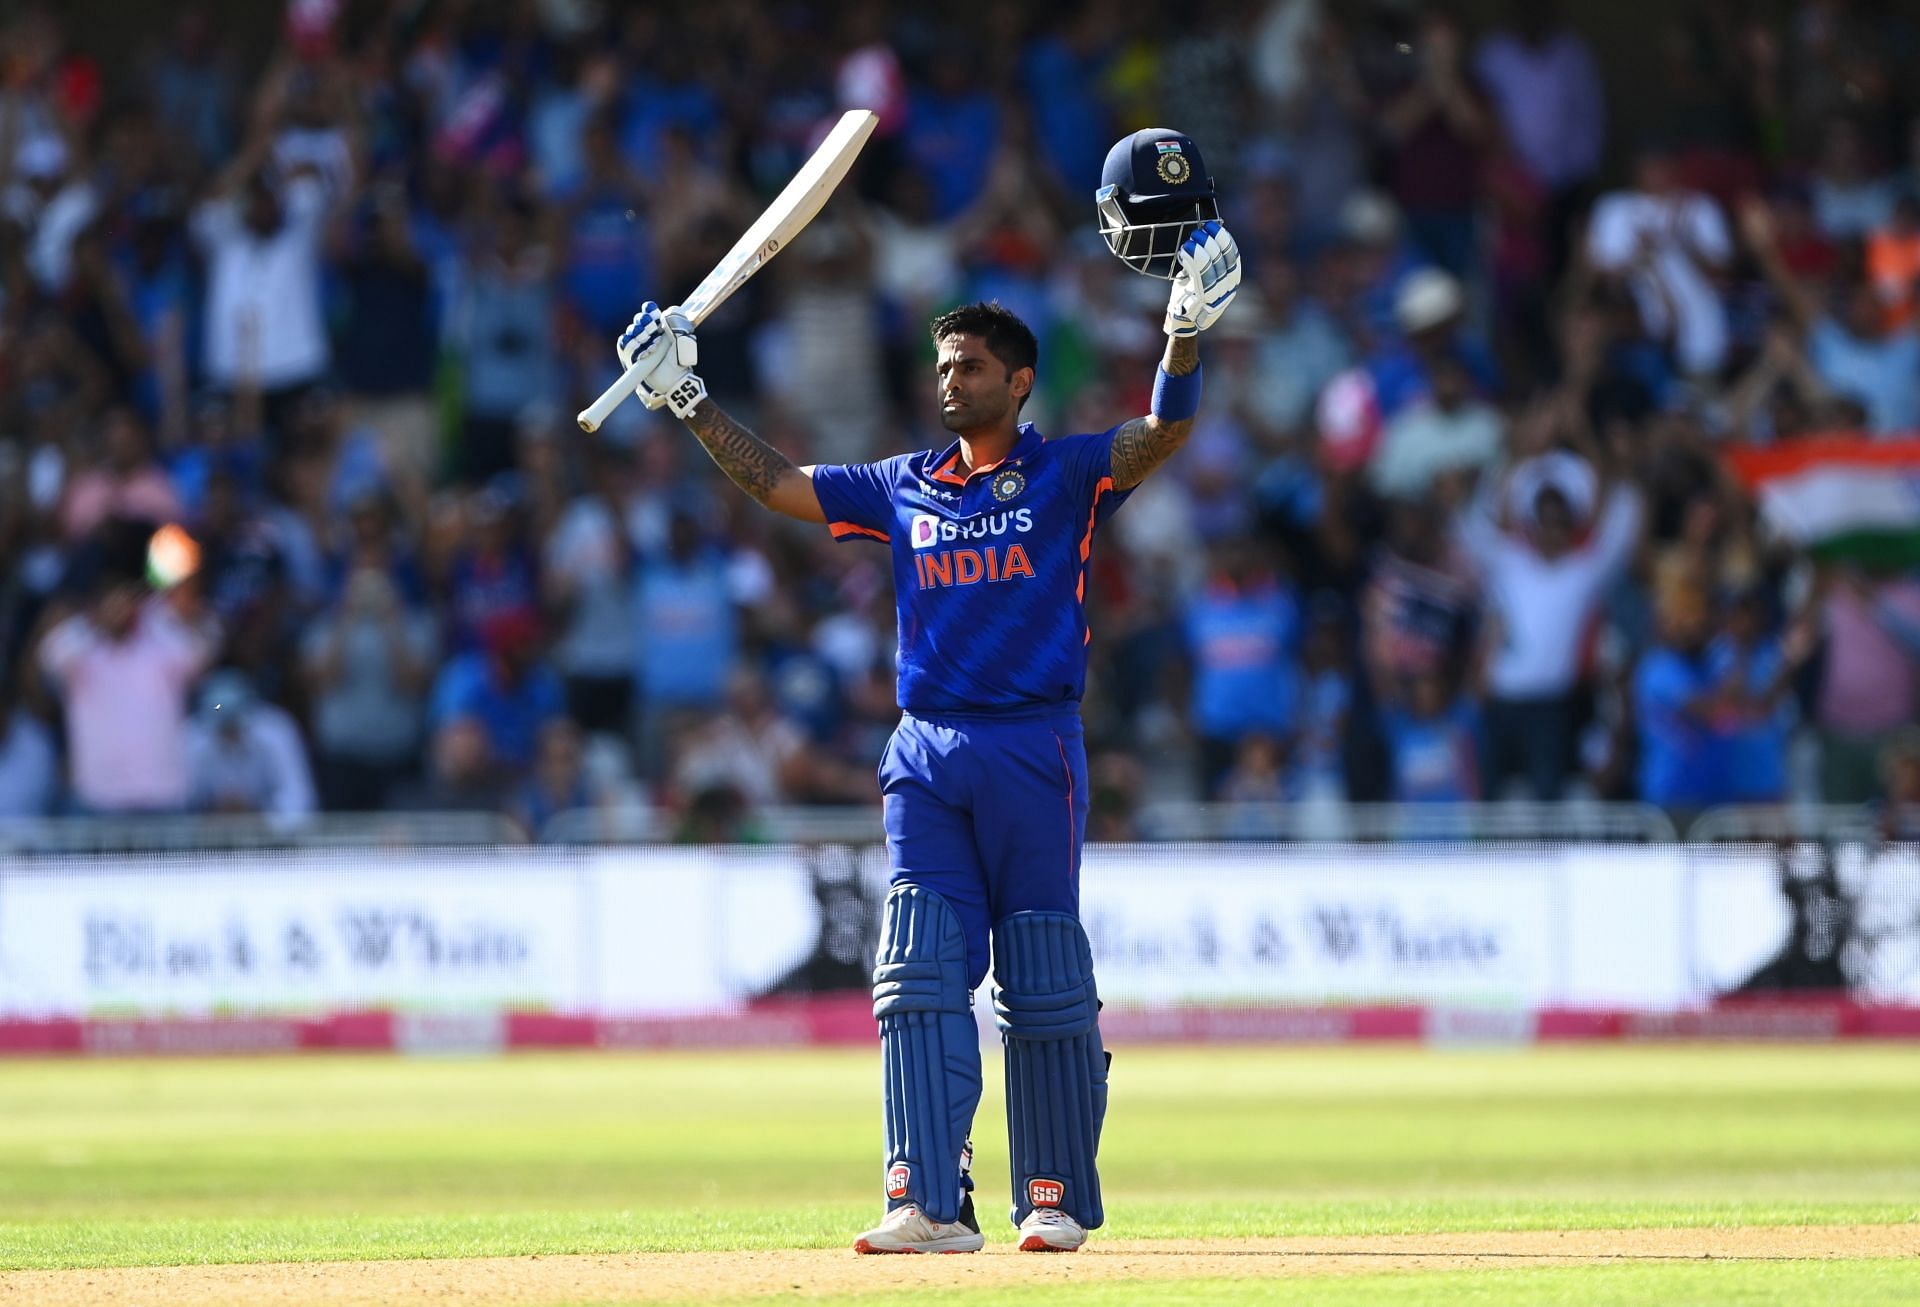 Suryakumar Yadav scored a fighting century in the third T20I against England